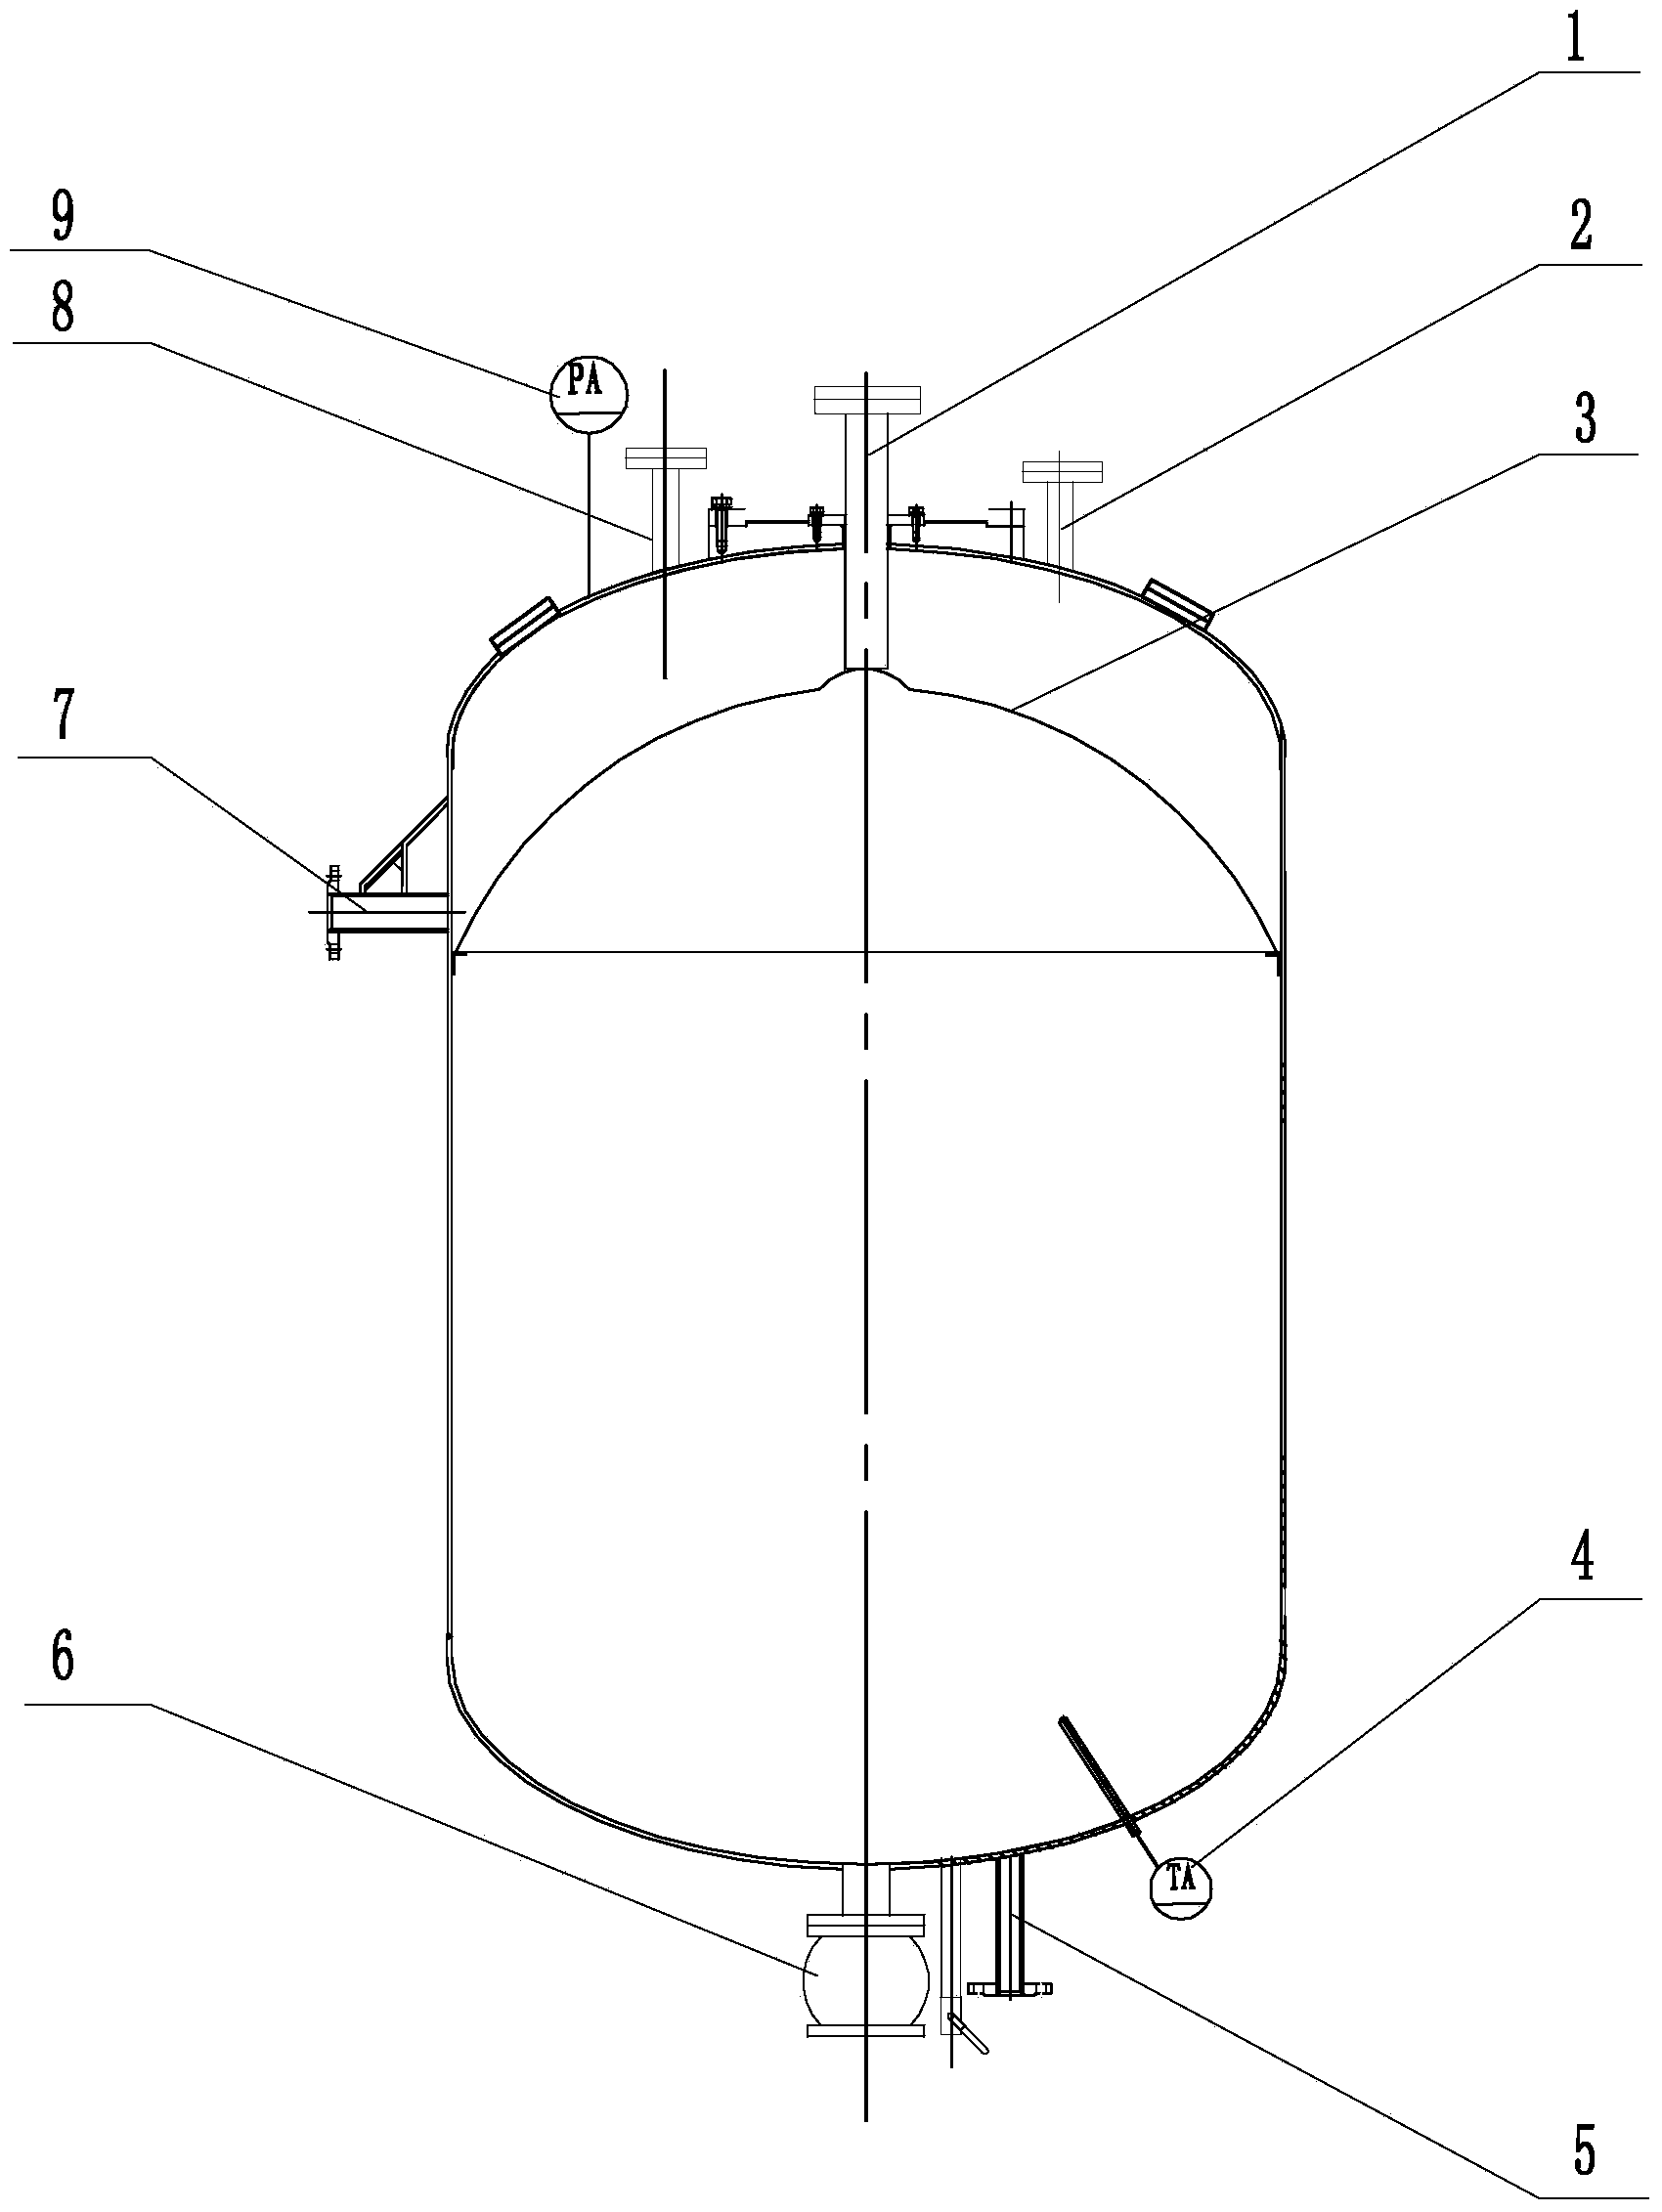 Defoaming kettle and defoaming method for preparing polyamide acid resin